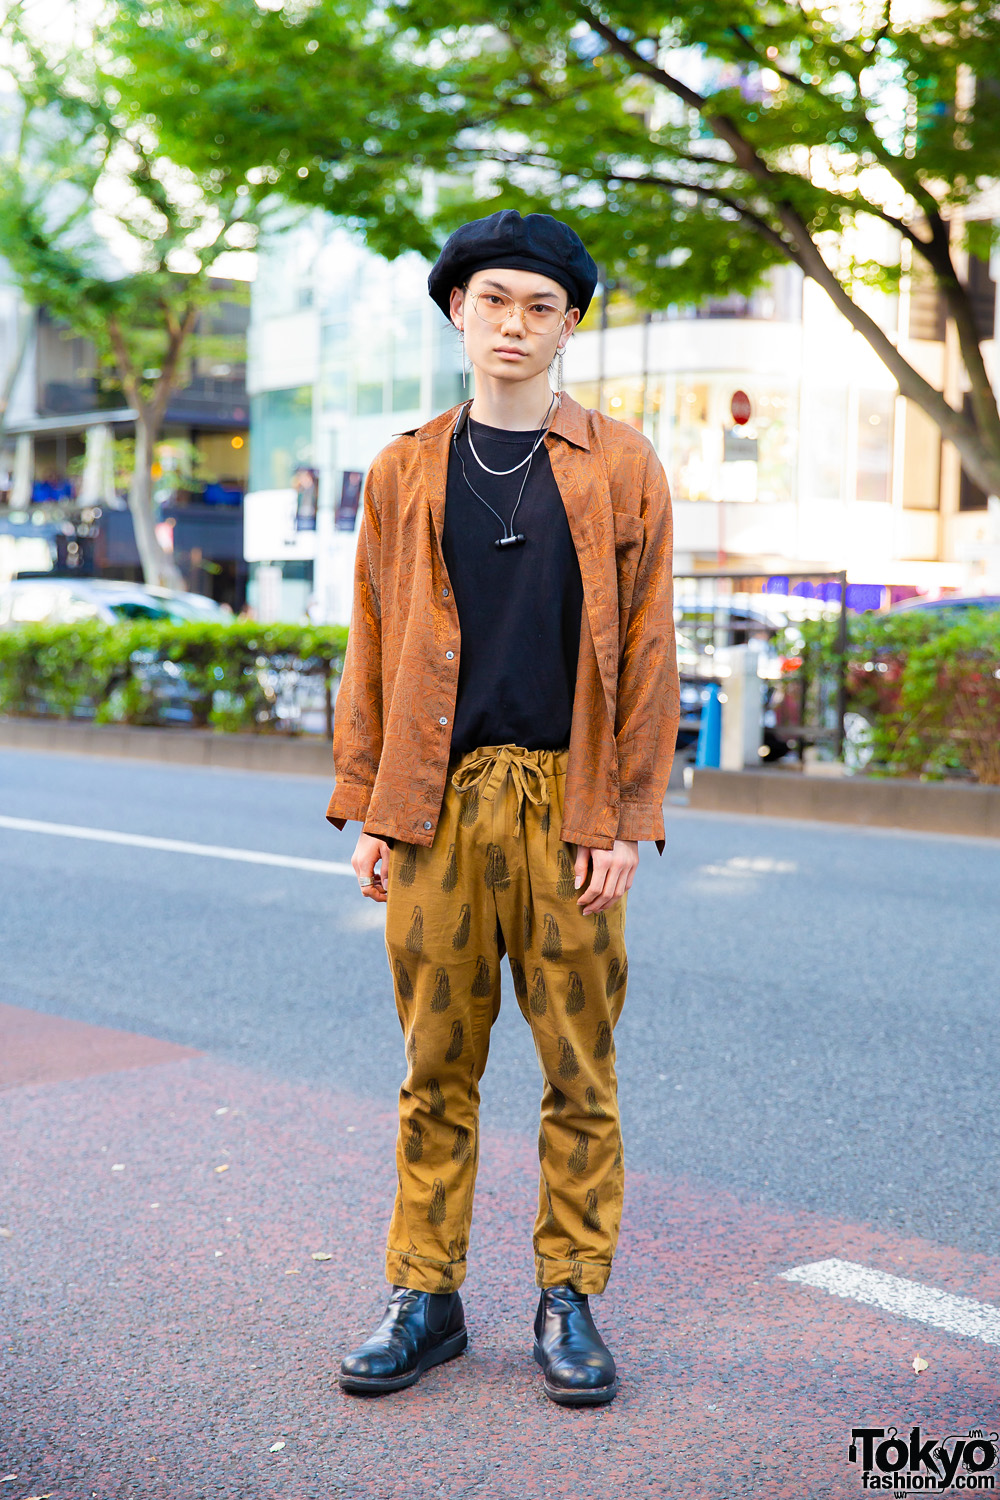 Tokyo Vintage Streetwear Style w/ Black Beret, Patterned Shirt, Printed Pants & Black Boots